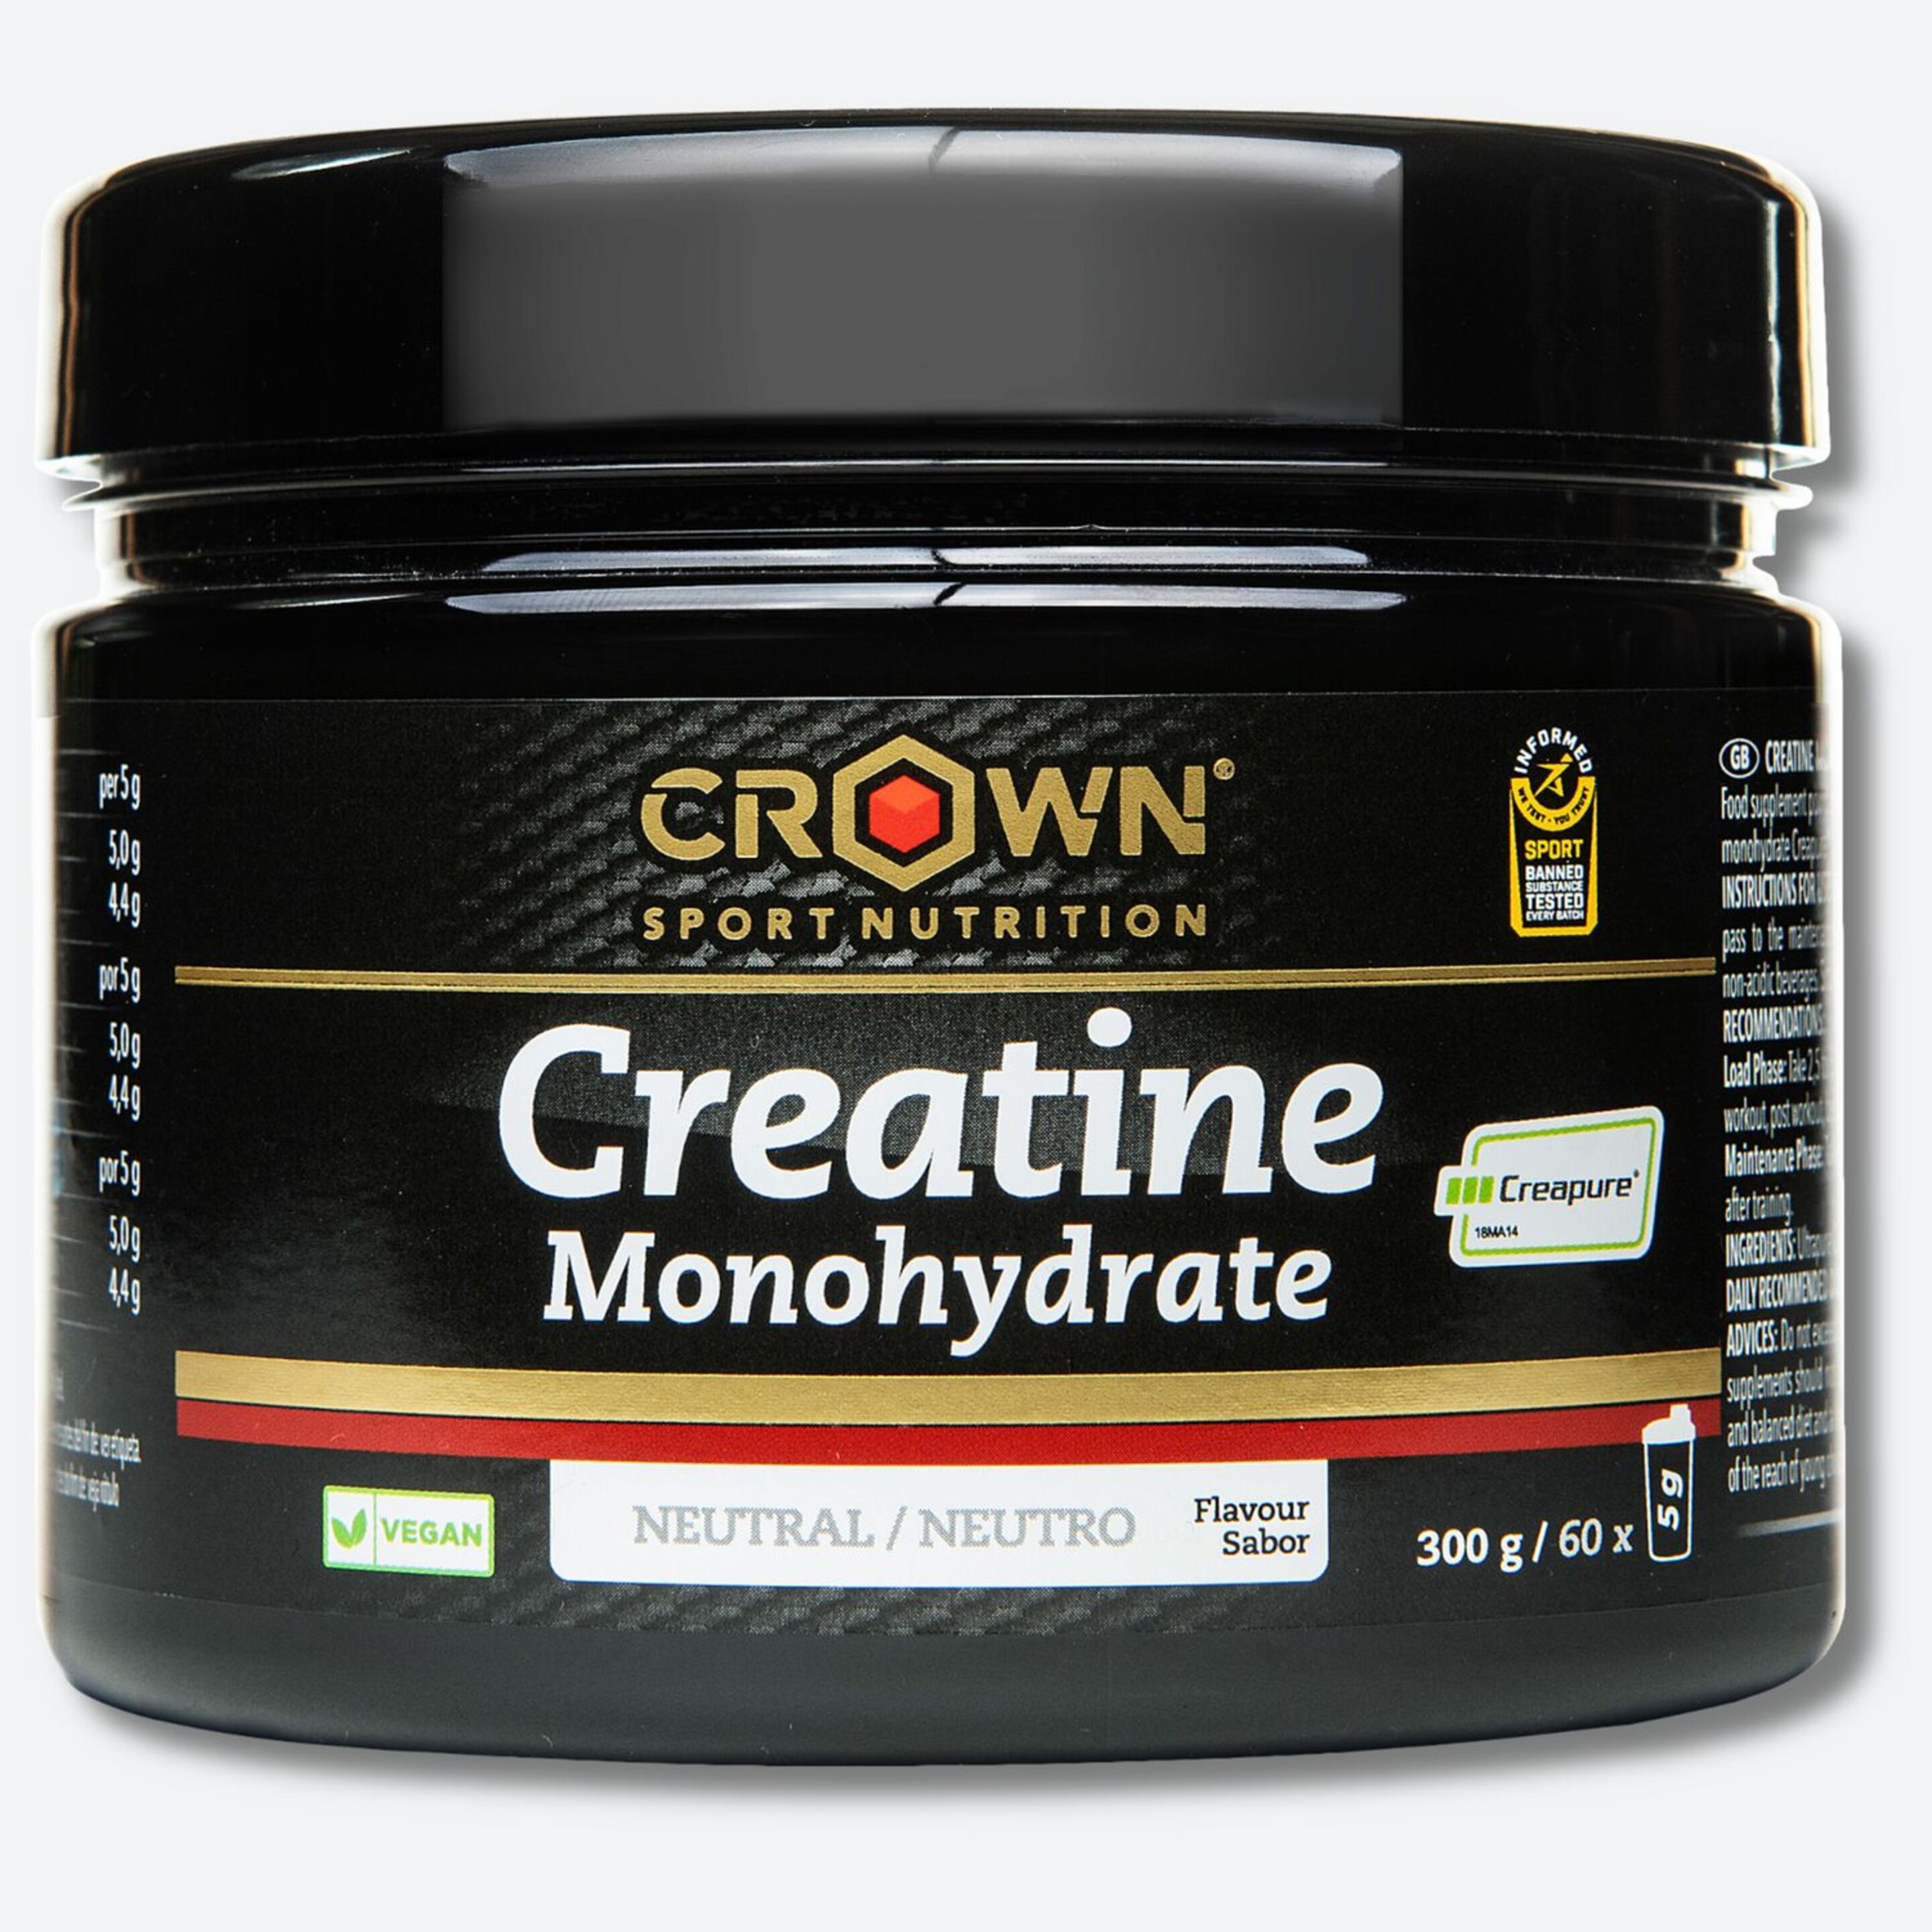 Bote De Creatina Monohidrato Creapure De 300g Crown Sport Nutrition Neutro